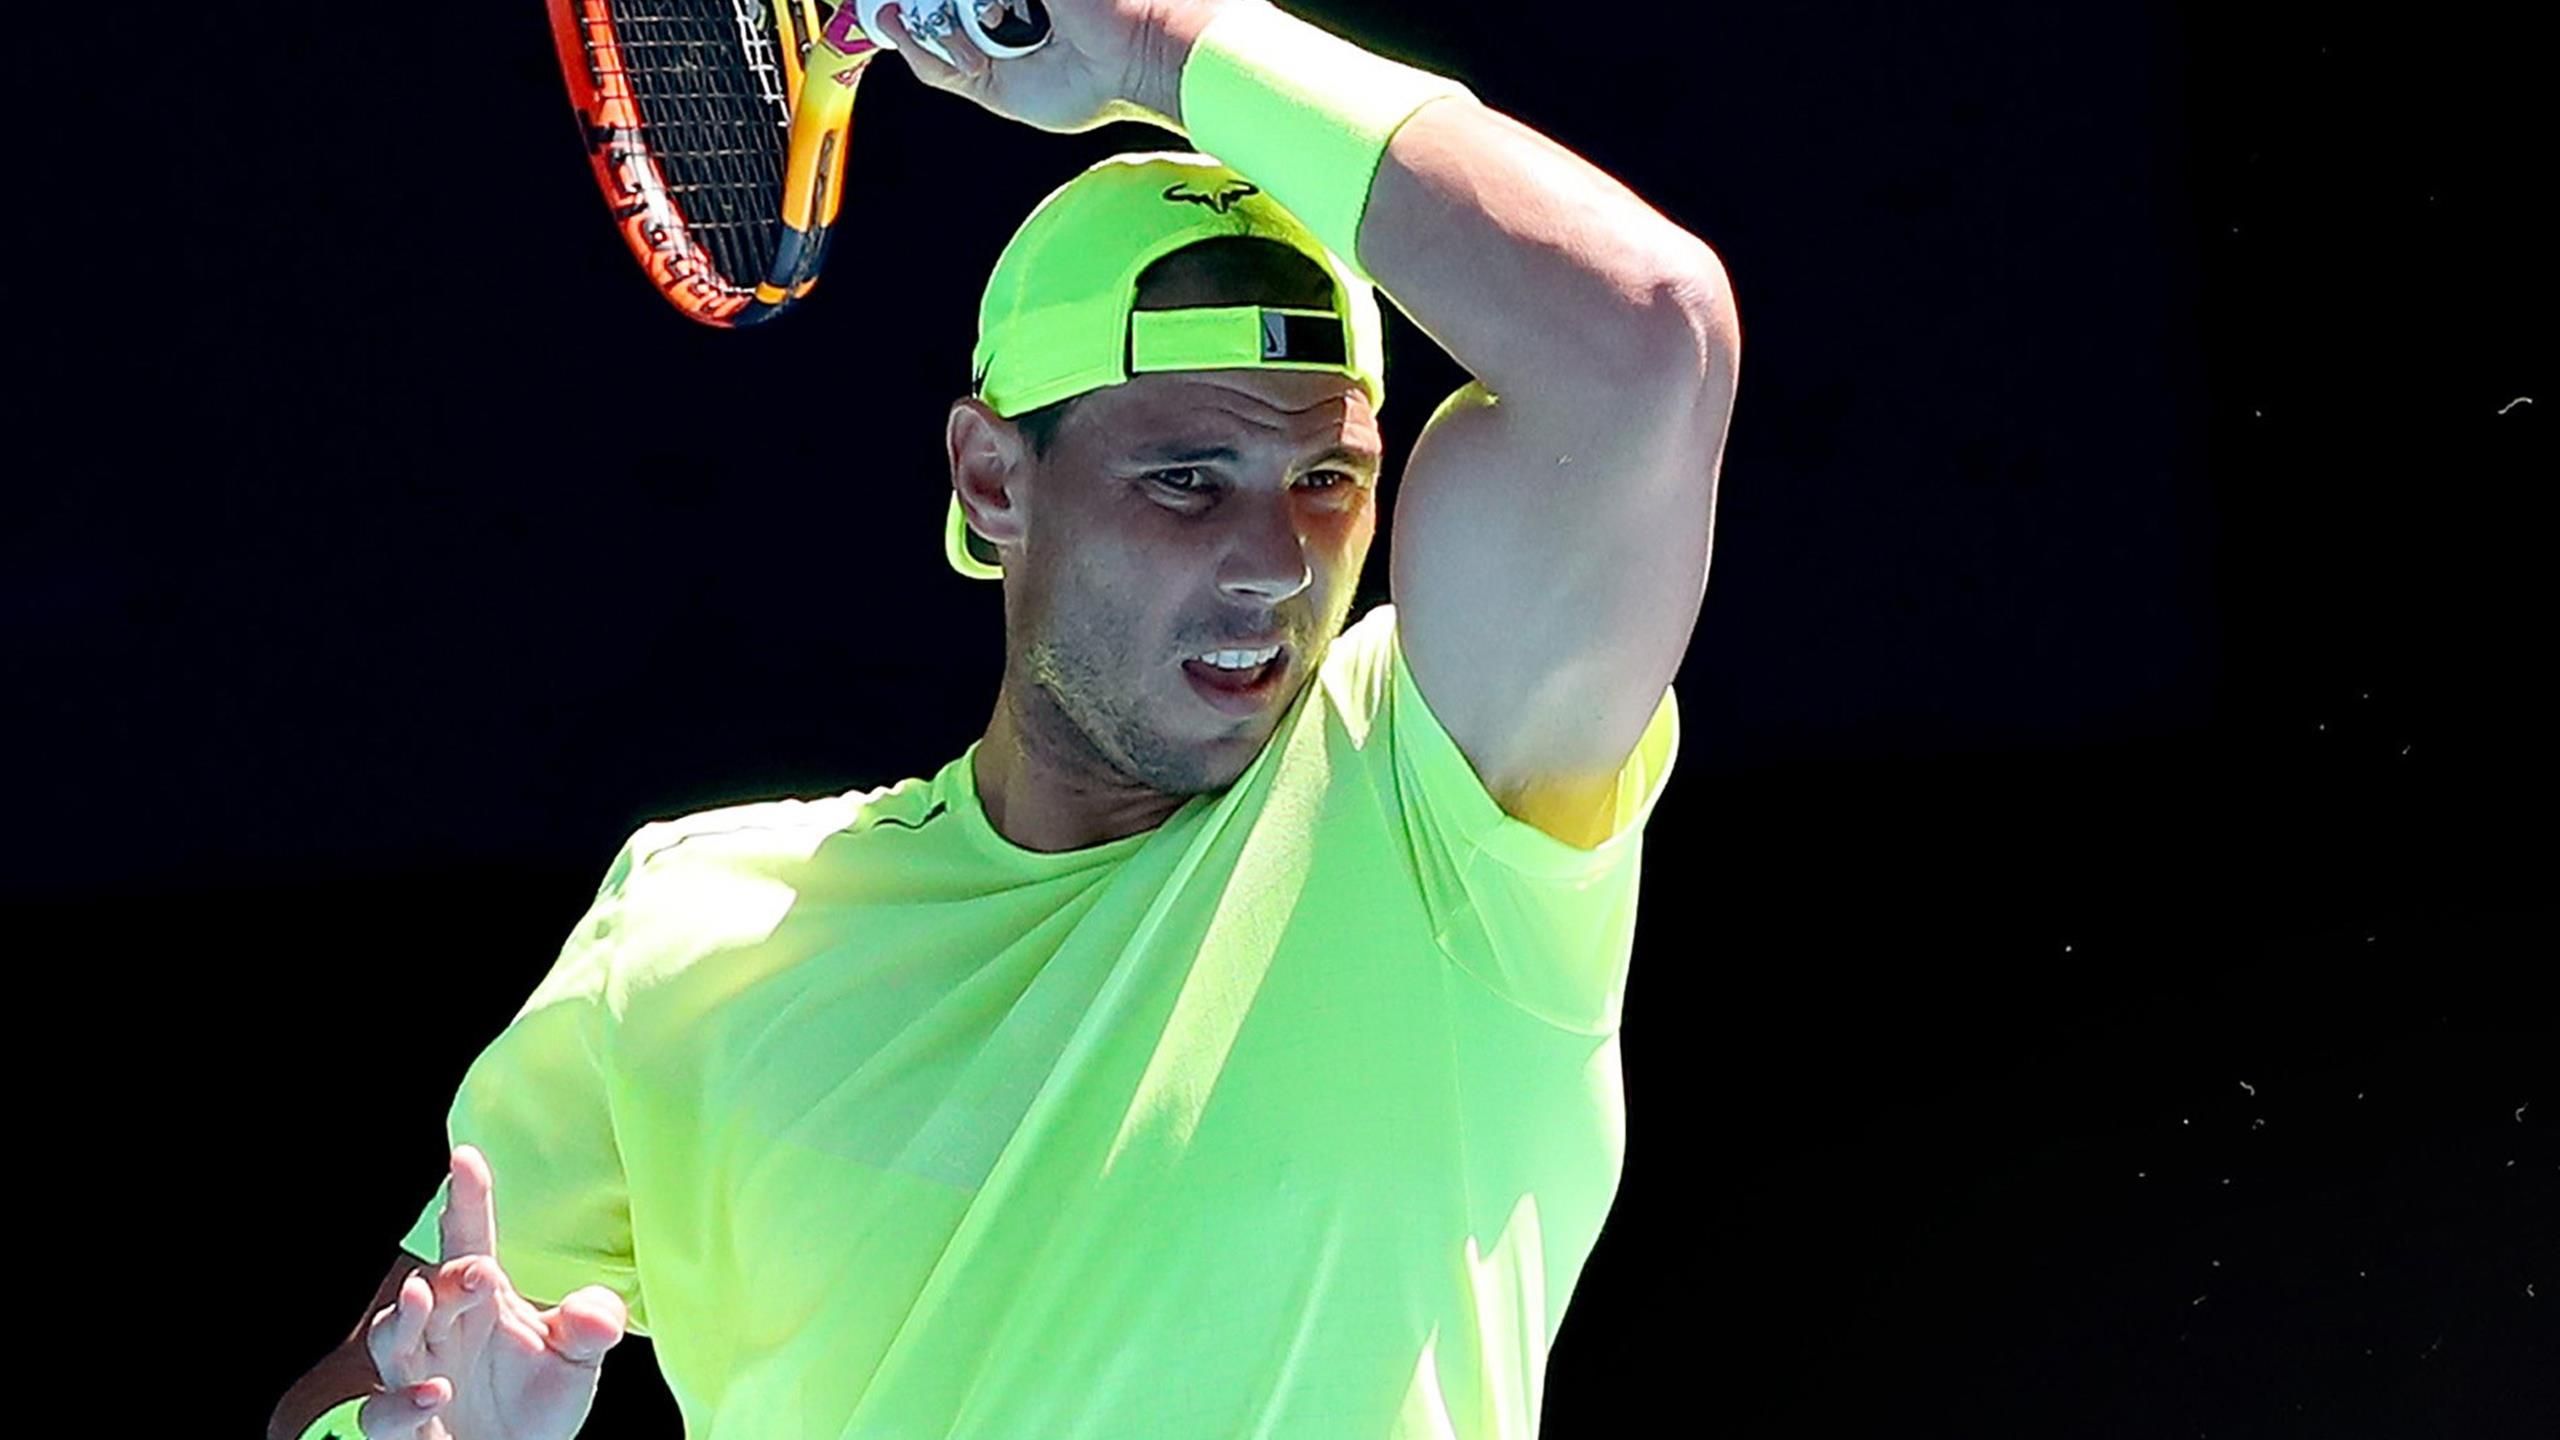 Rafael Nadal feels in good shape ahead of Australian Open 2023 defence despite injury concerns